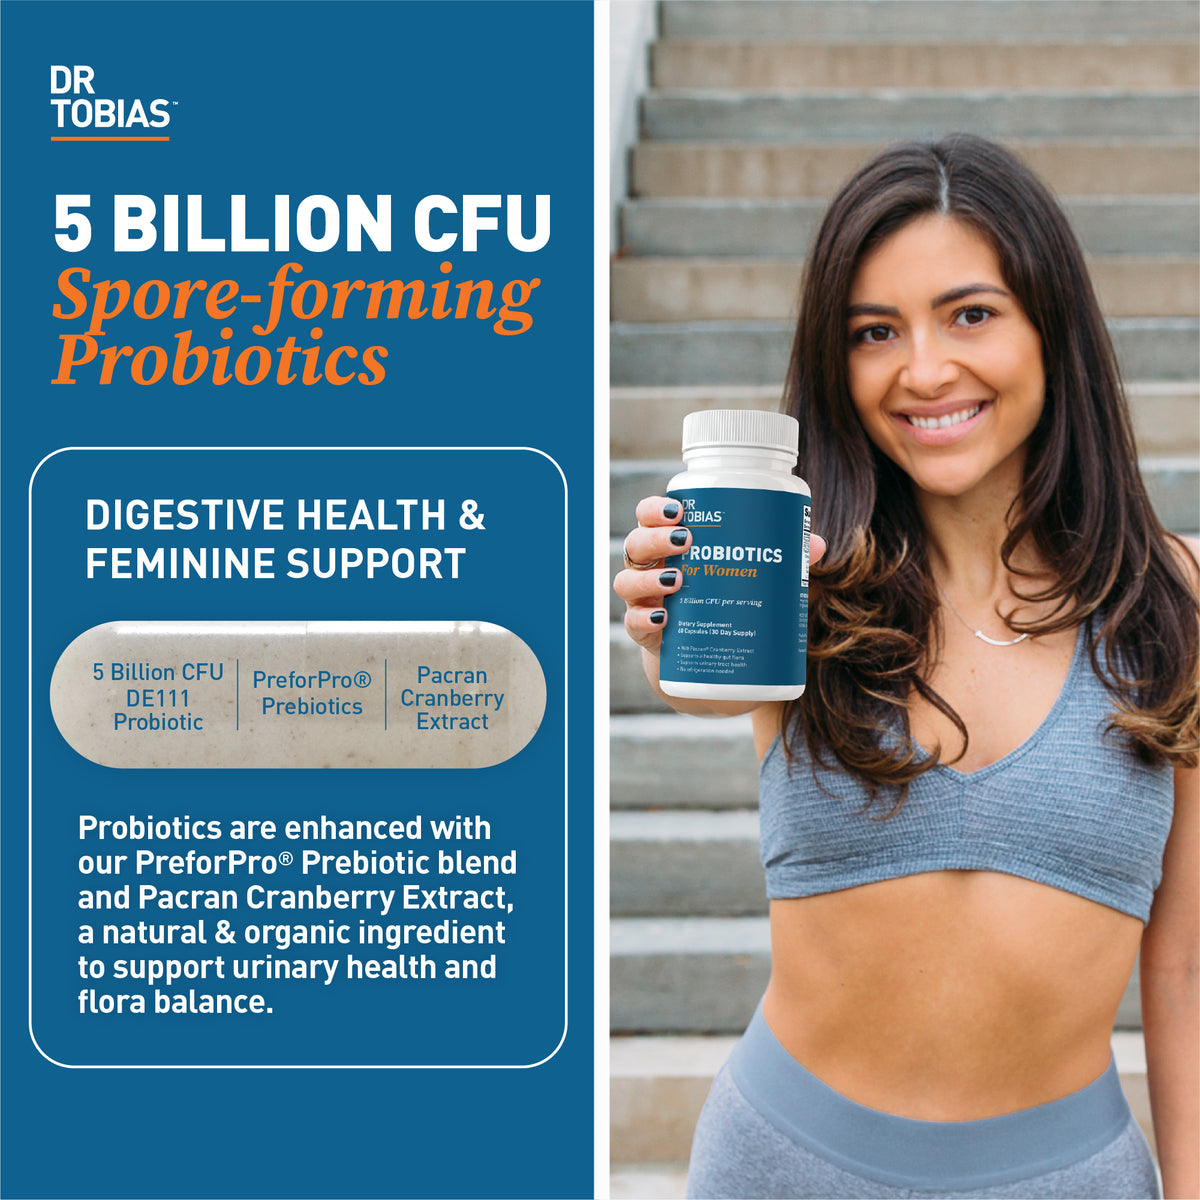 Probiotics for Women